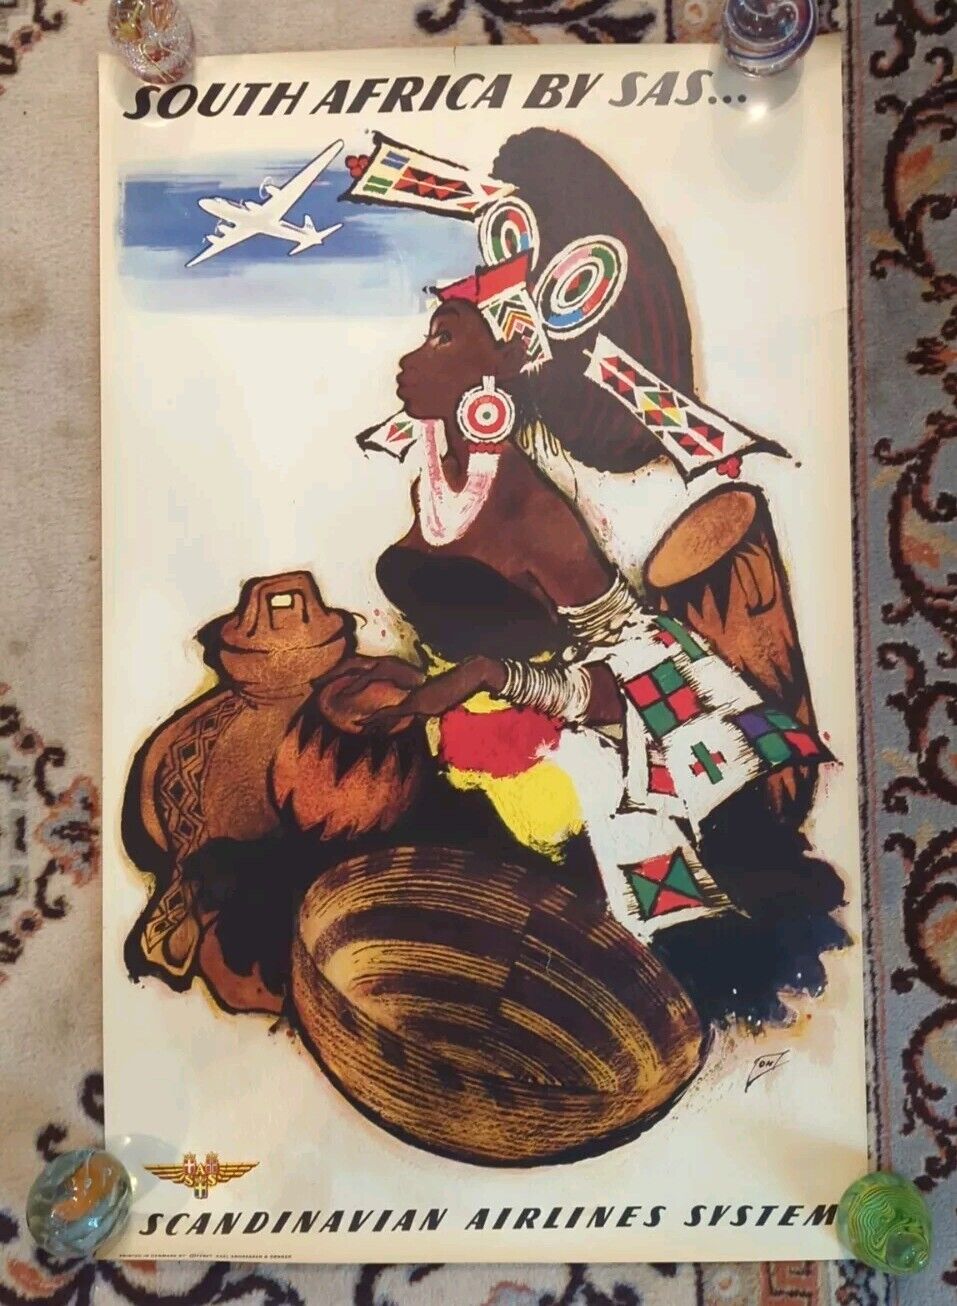 RARE Original Vintage 1950s SAS Scandinavian Airlines System SOUTH AFRICA Poster